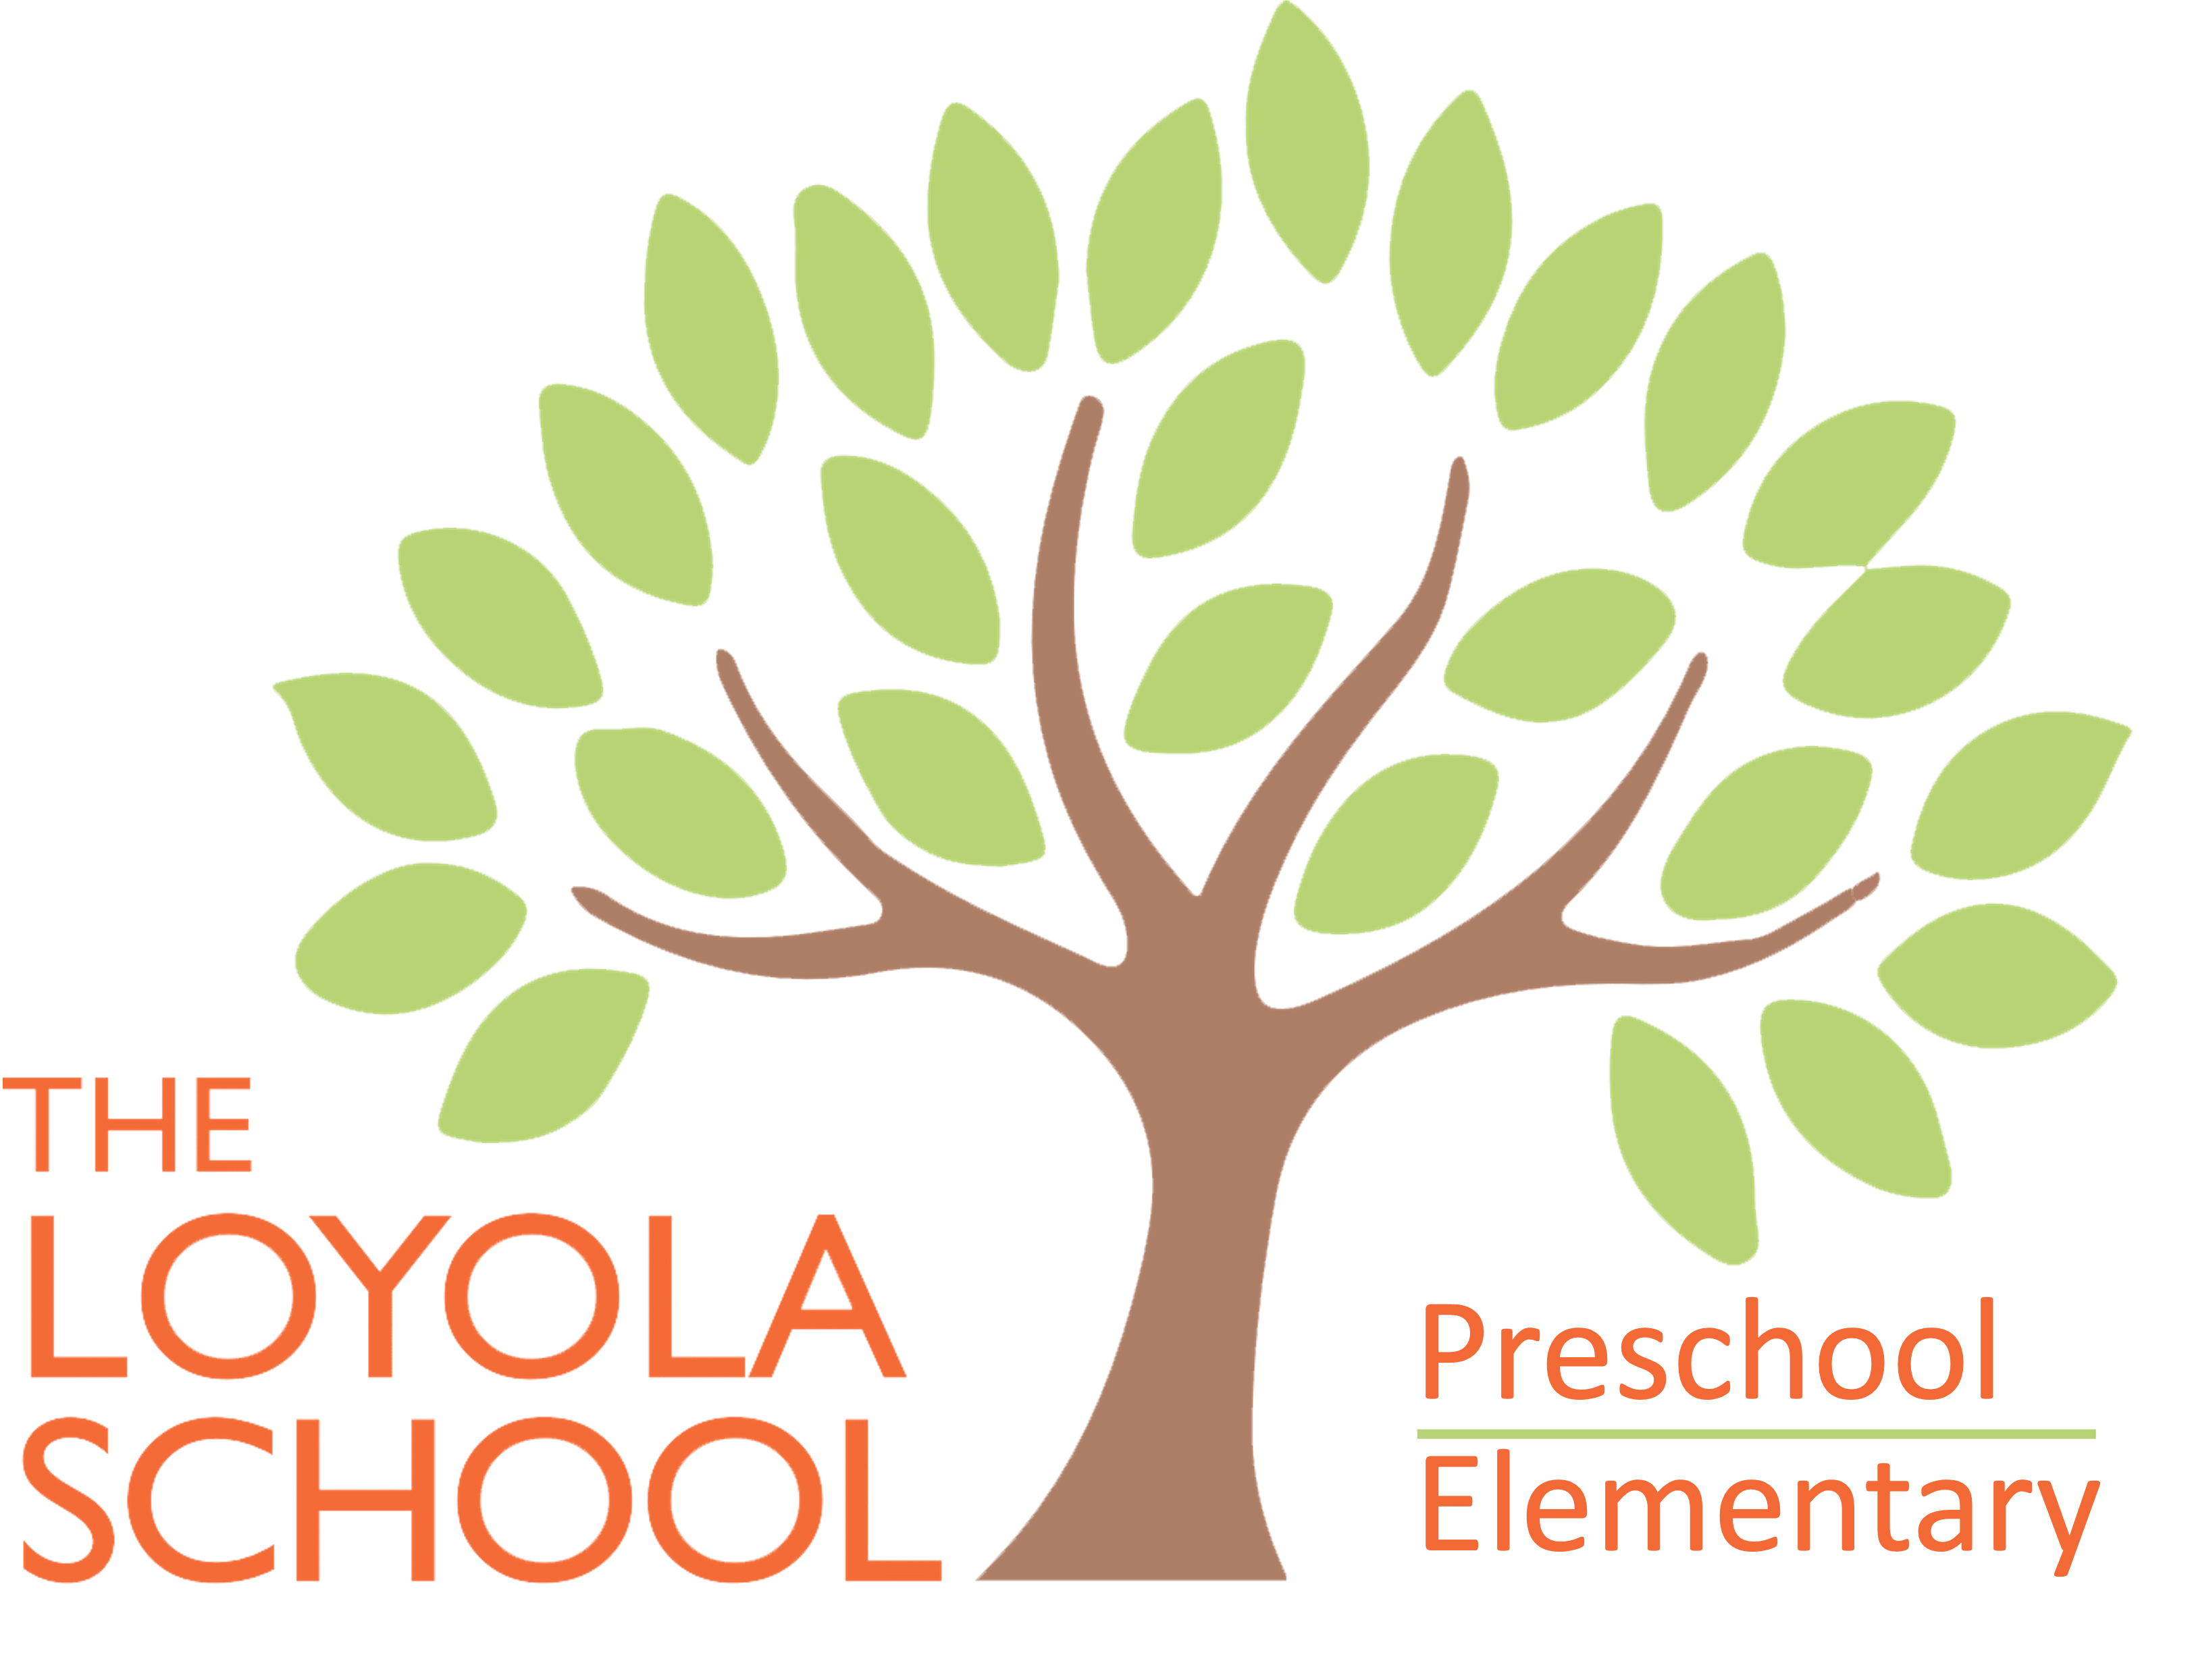 The Loyola School